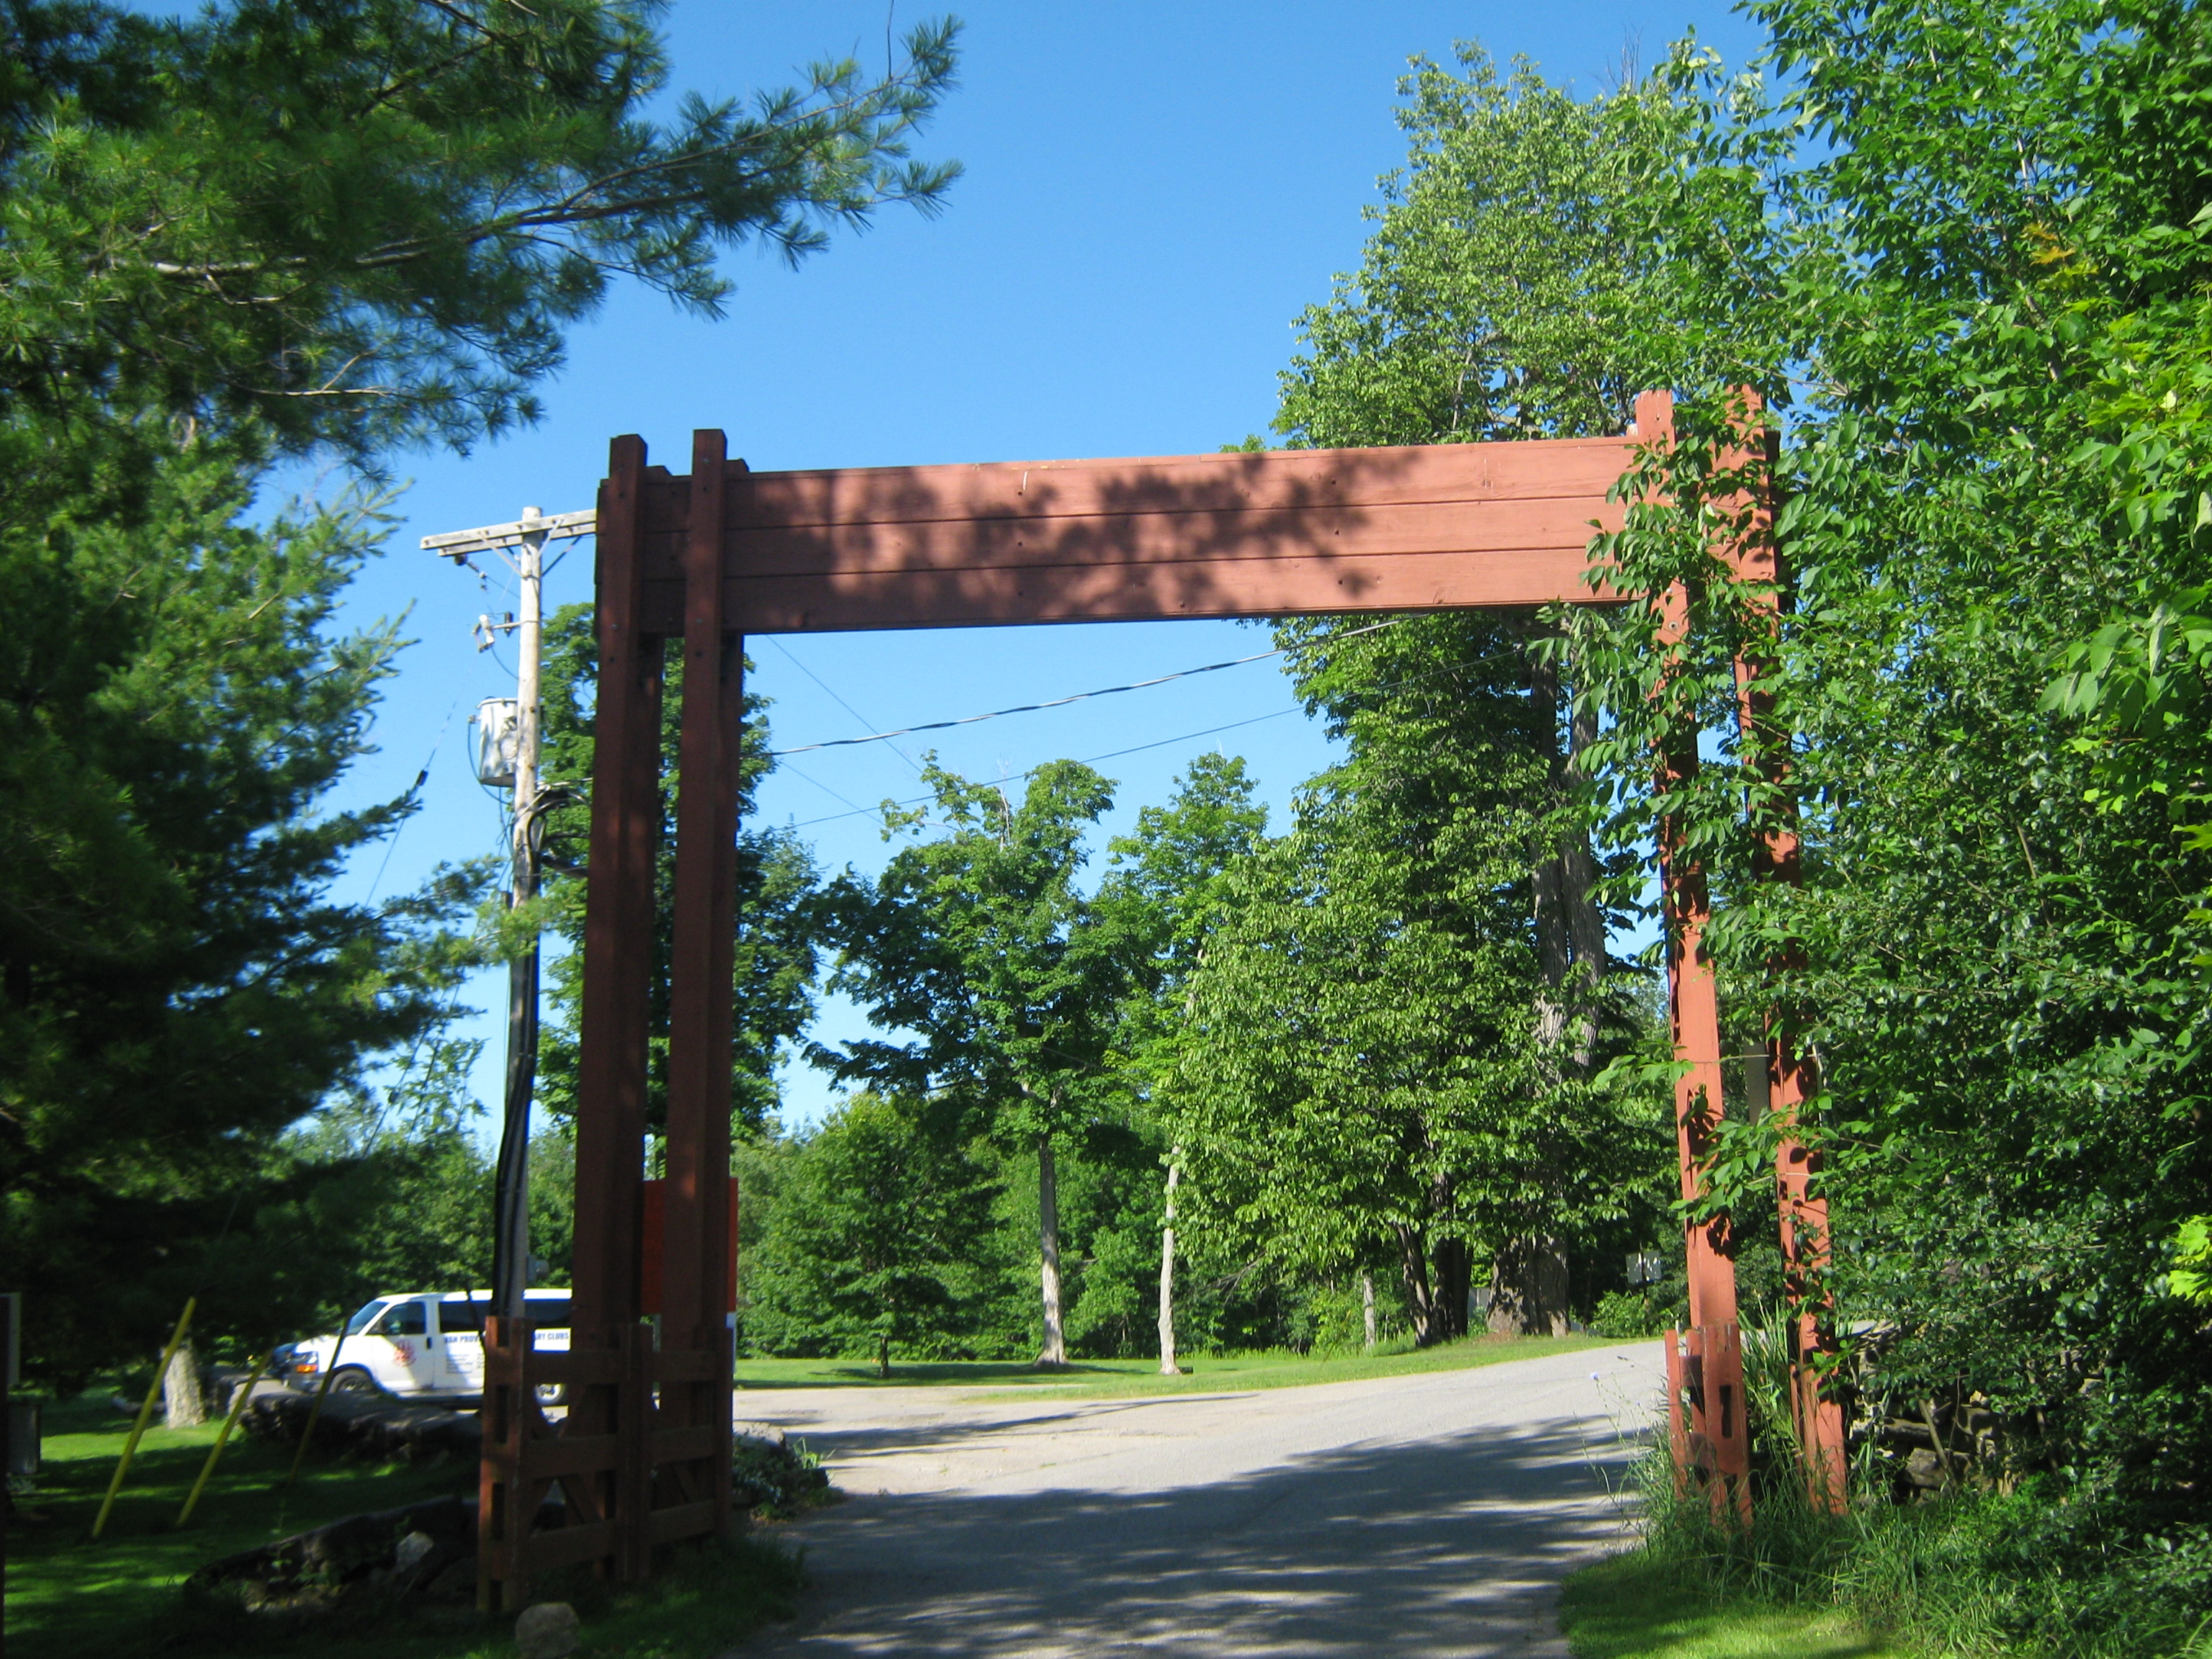 The Cameron Gates  - the main entrance into camp.